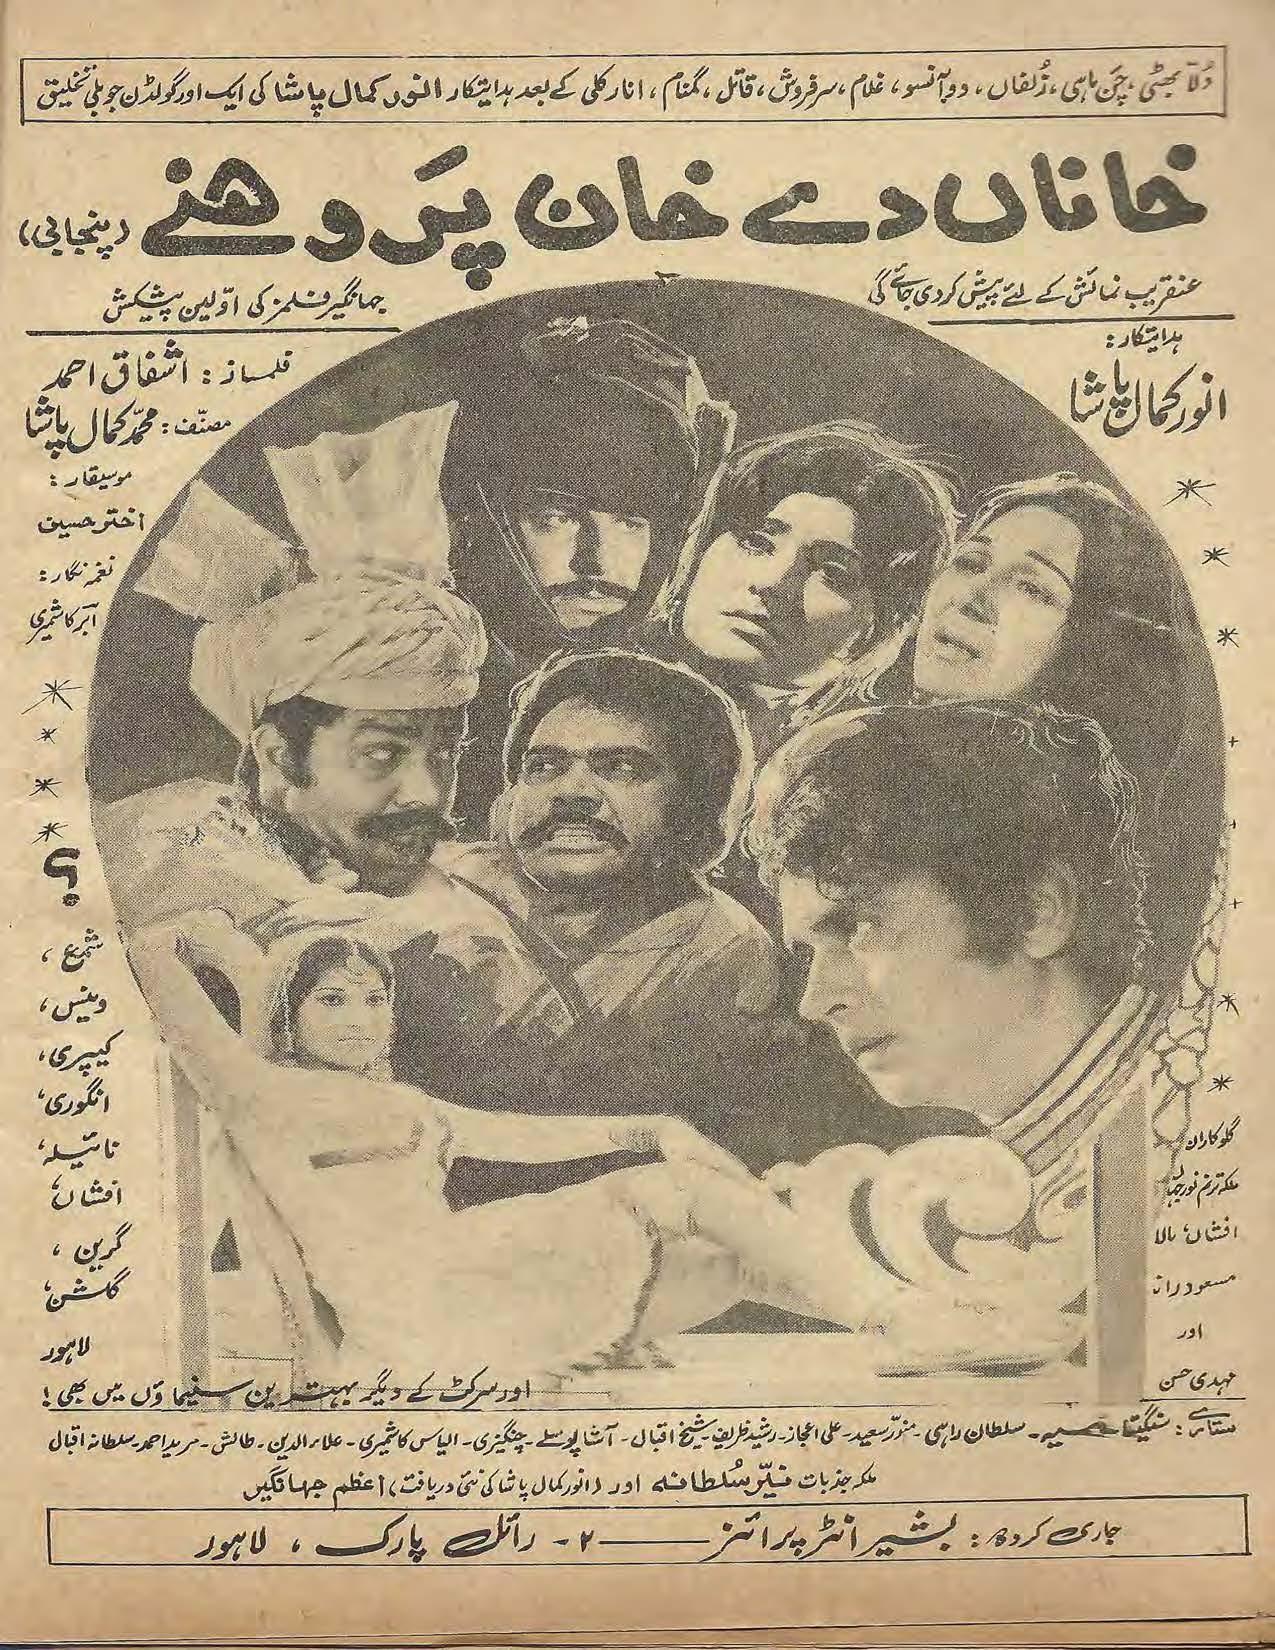 Shama (Jan, 1973) - KHAJISTAN™